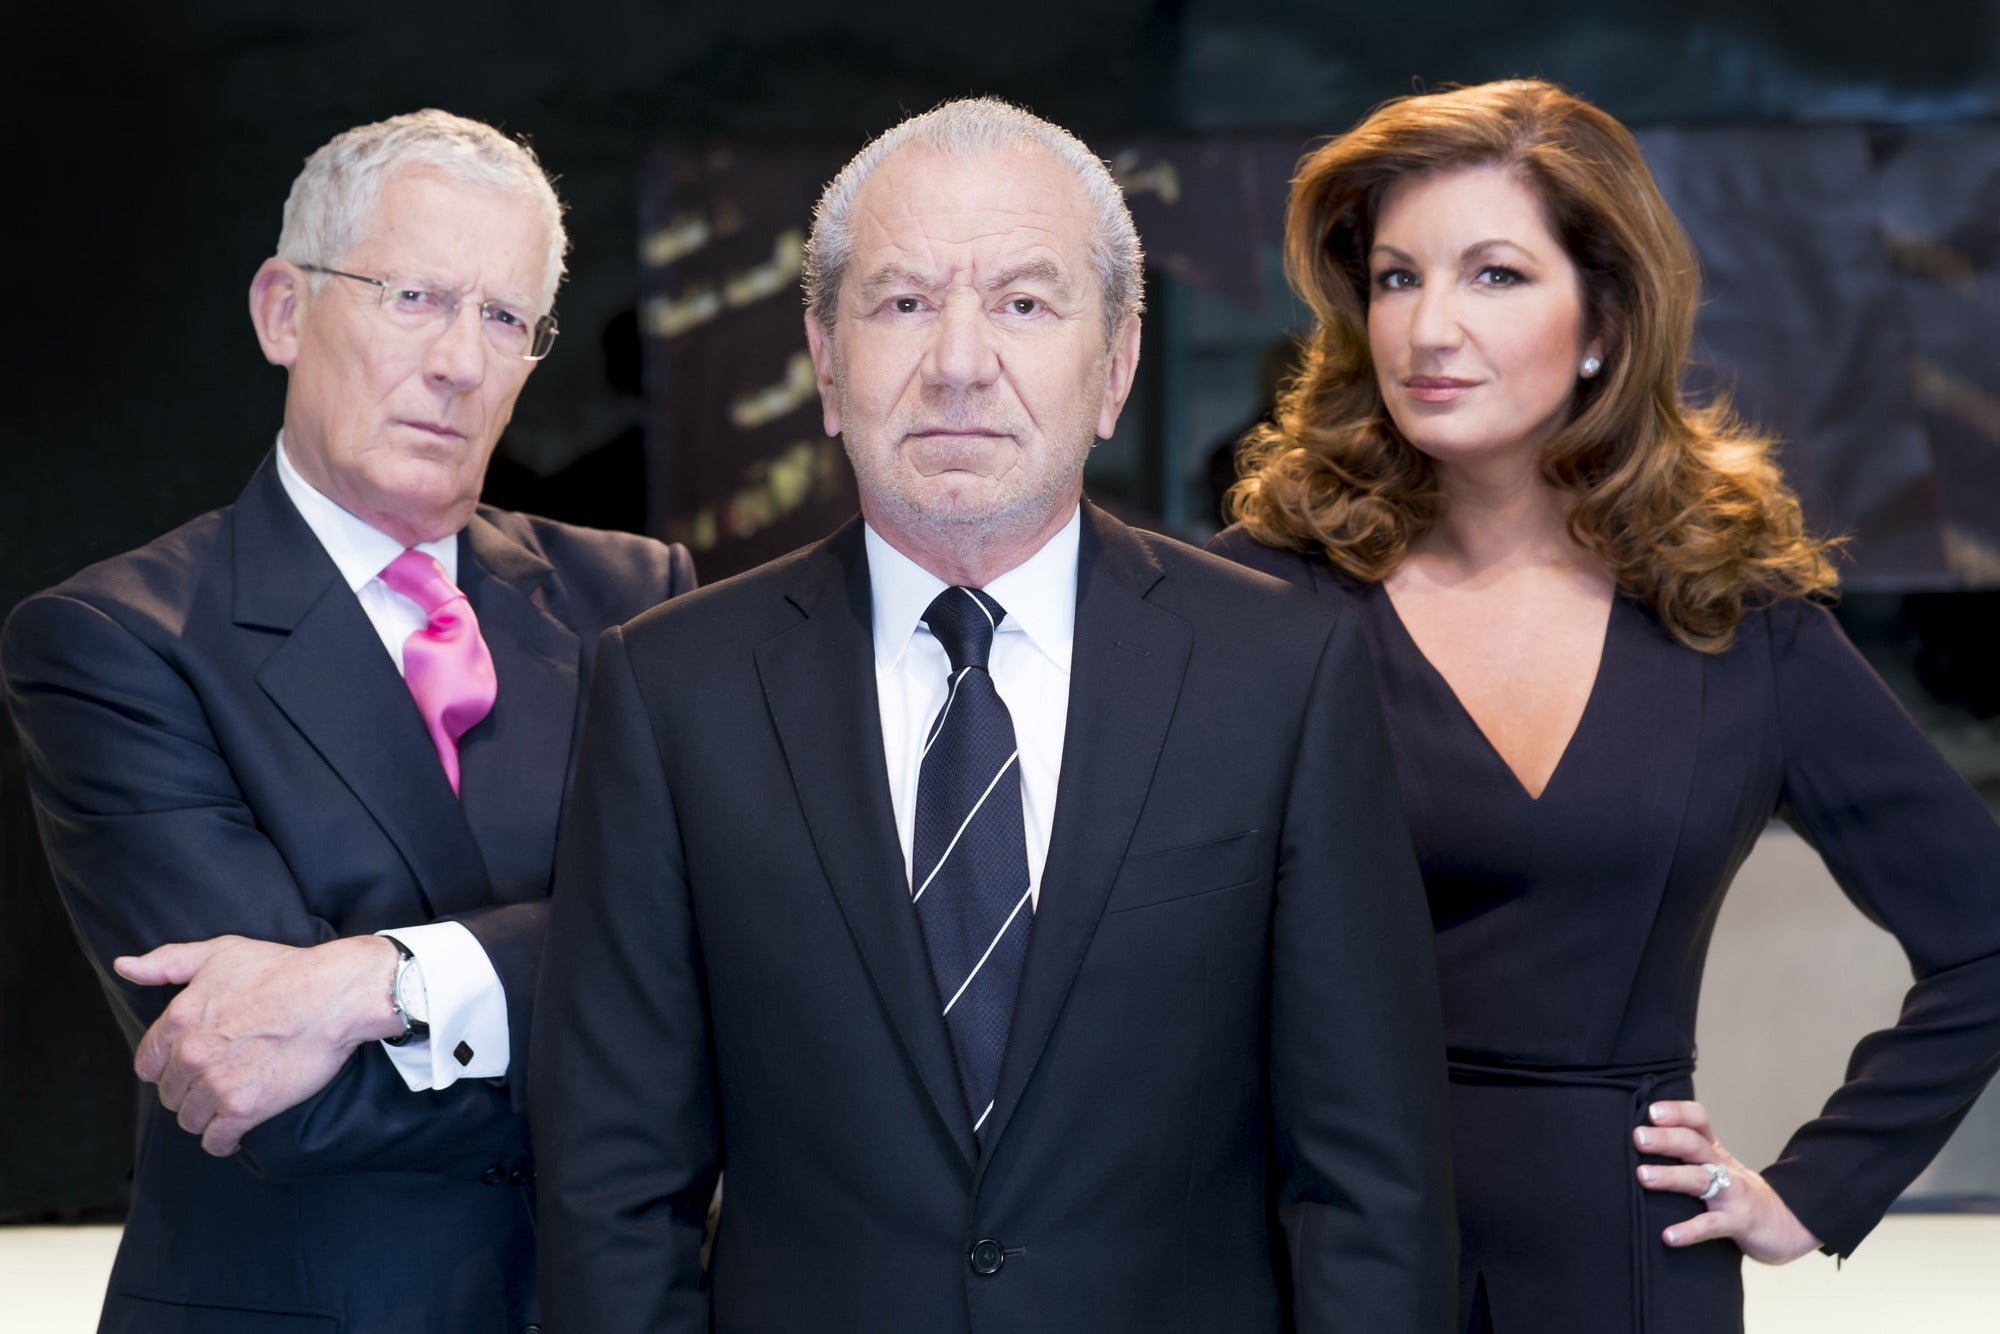 The Apprentice: Series 9 - Nick Hewer, Lord Alan Sugar and Karren Brady